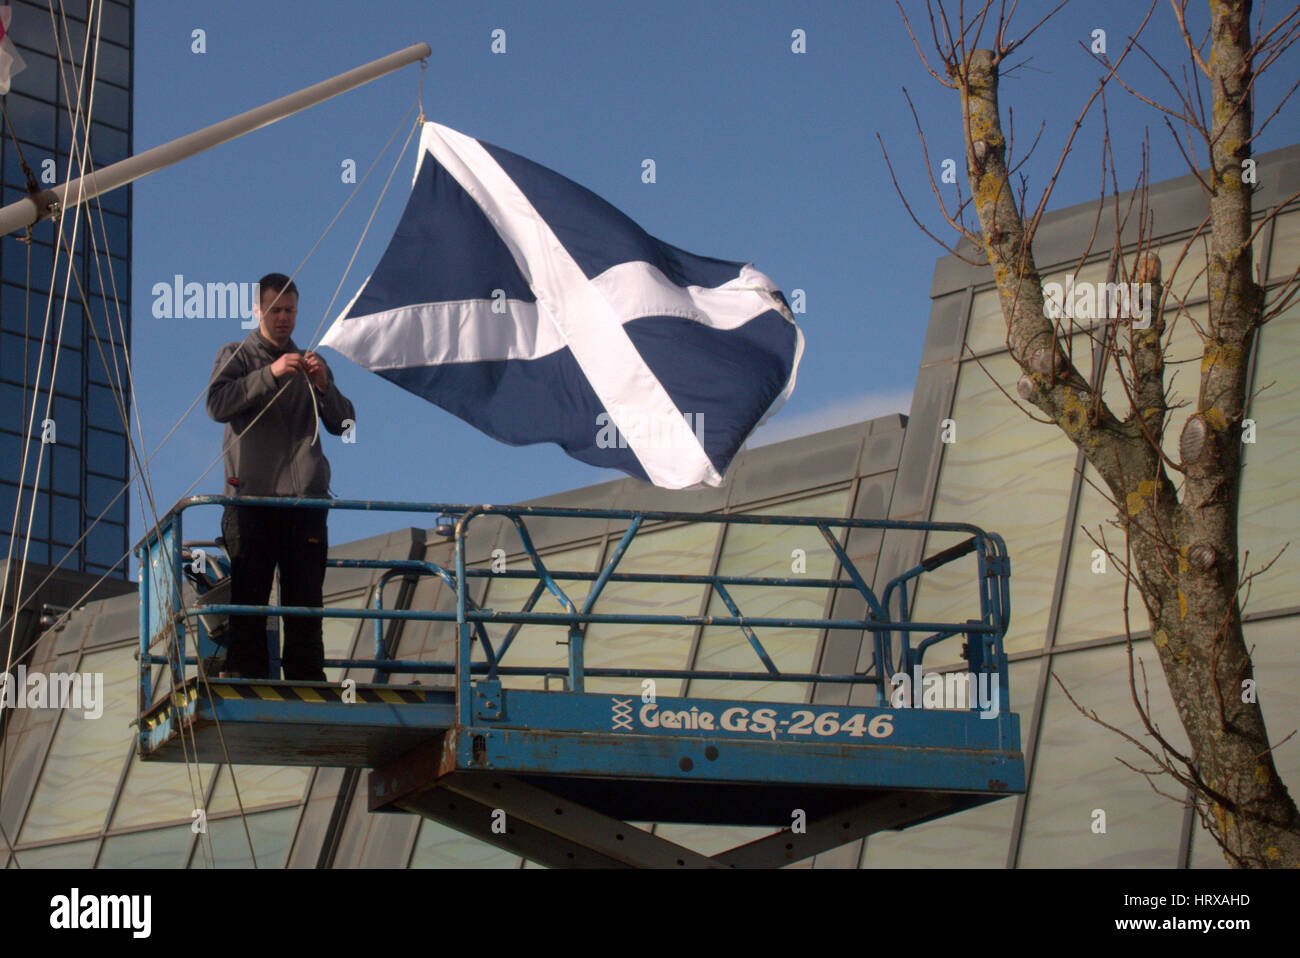 raising the Scottish flag om a platform man Stock Photo